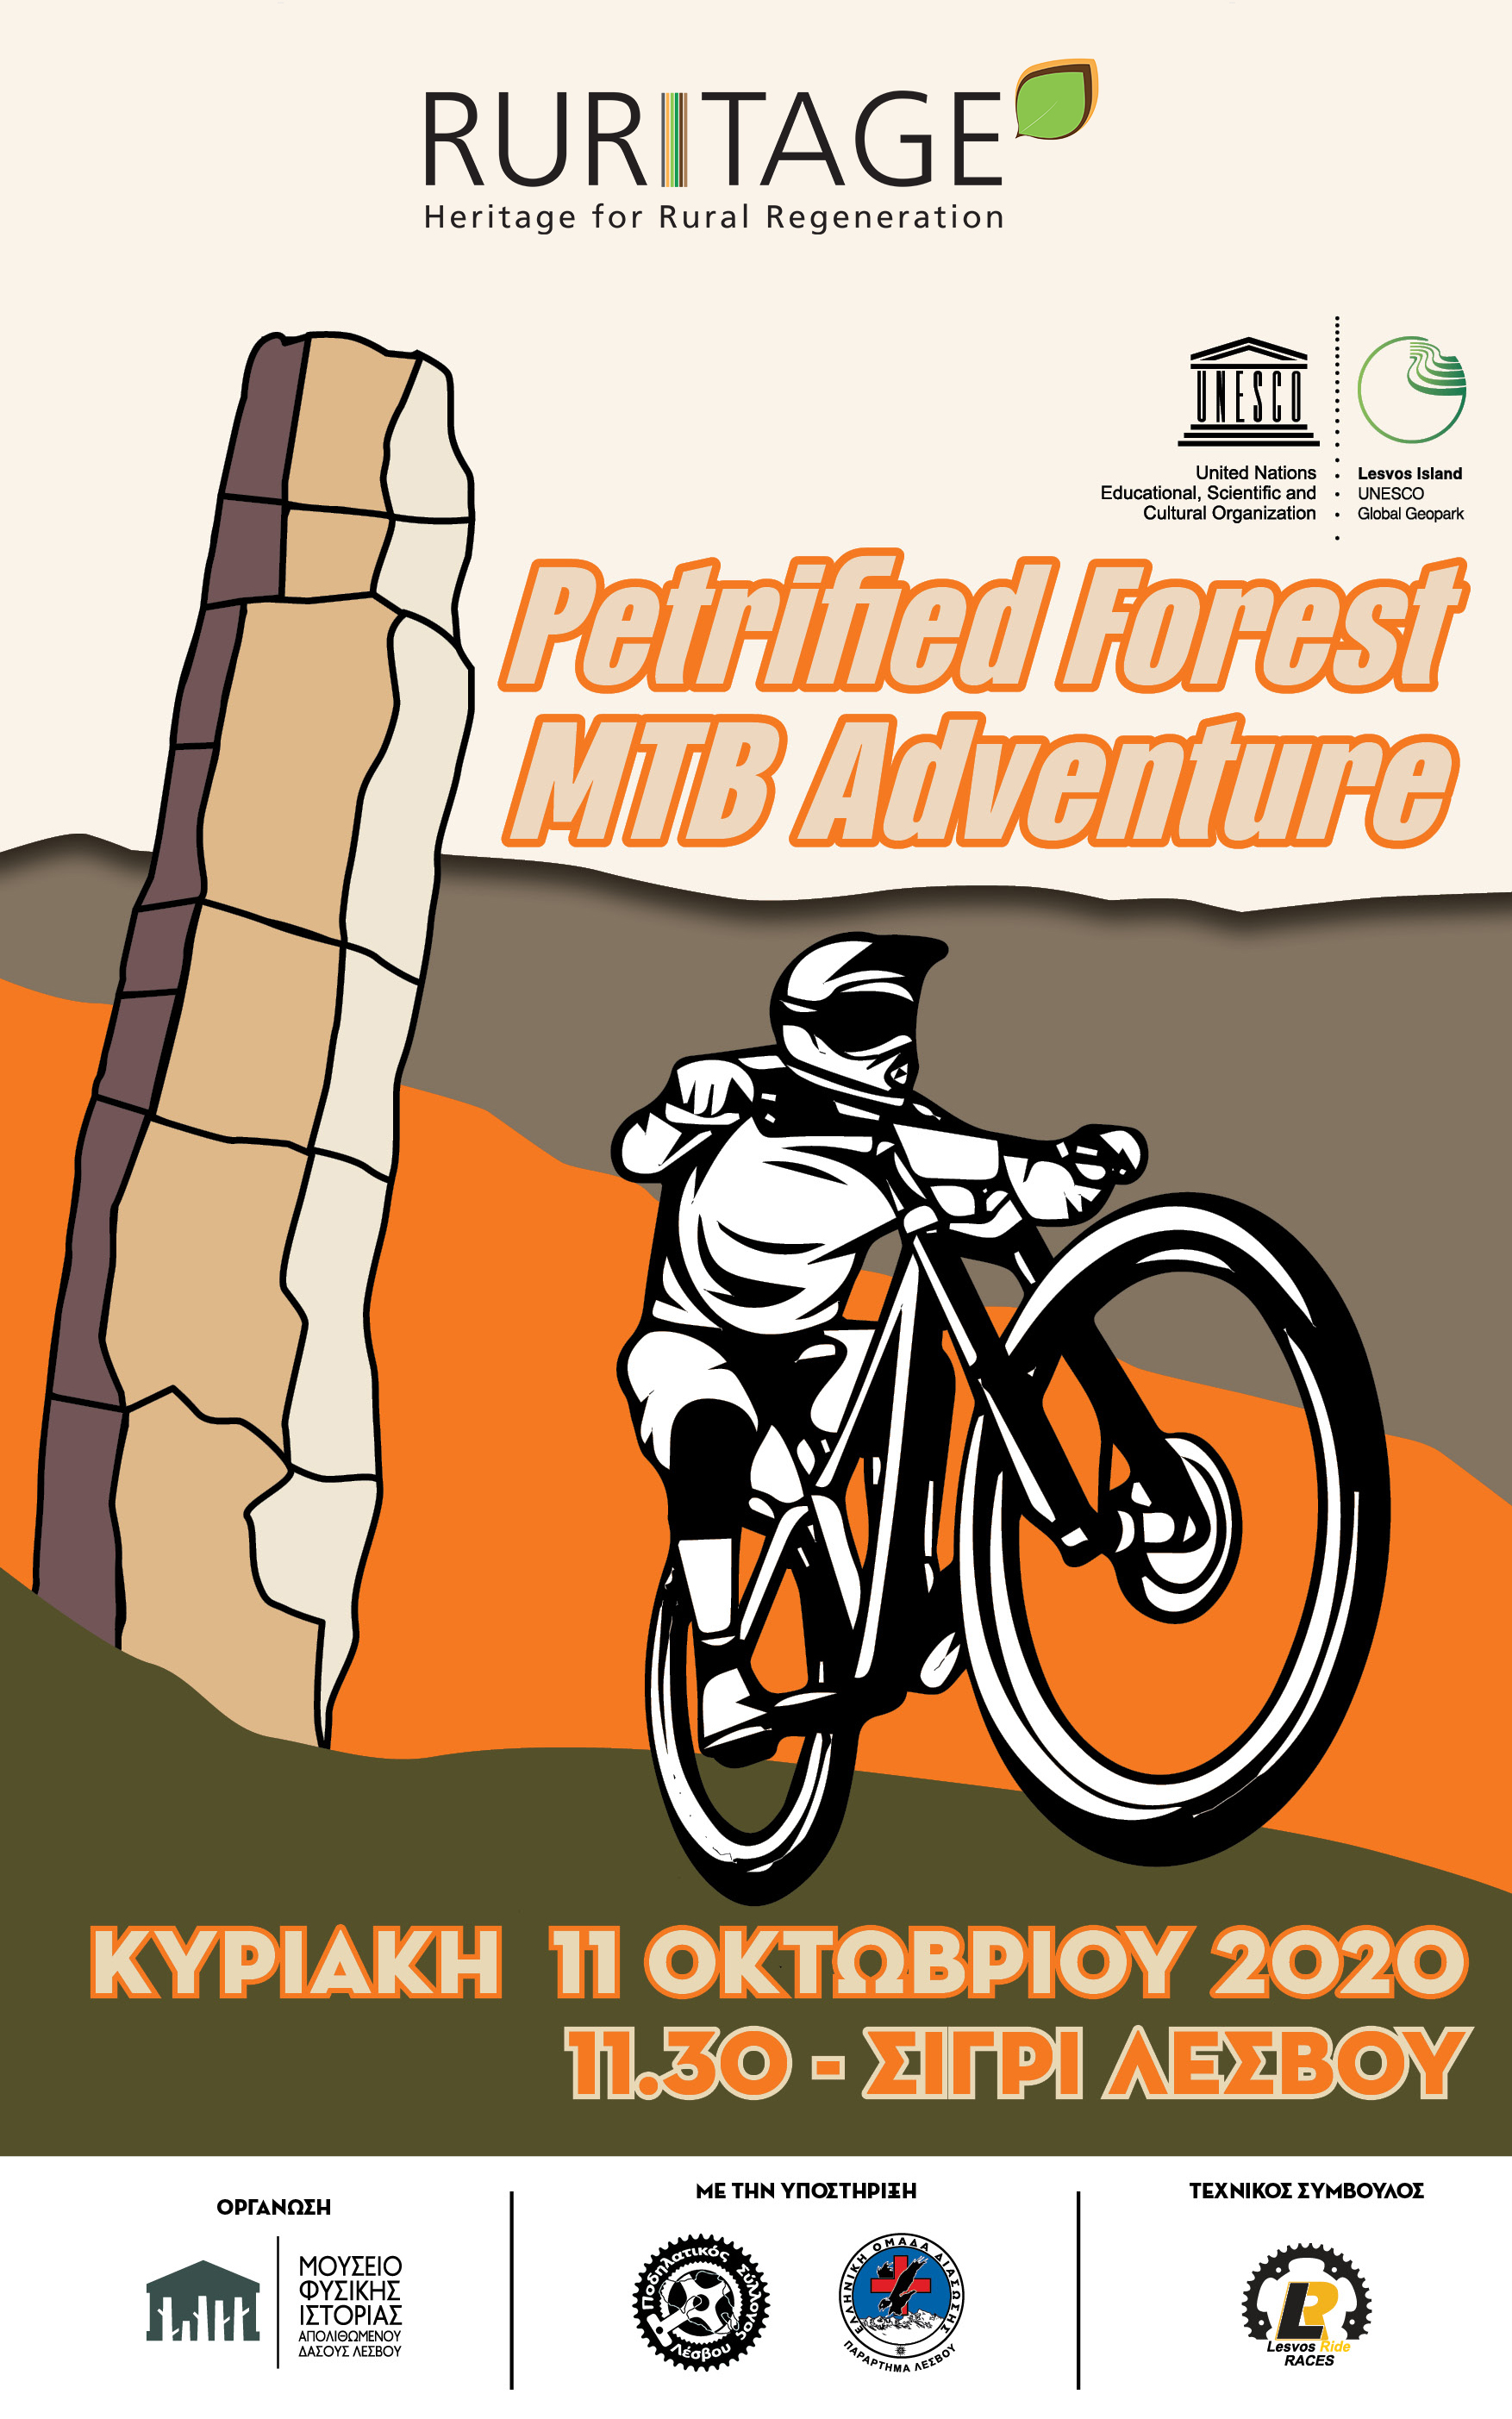 ‘’Petrified Forest Adventure MTB’’ 